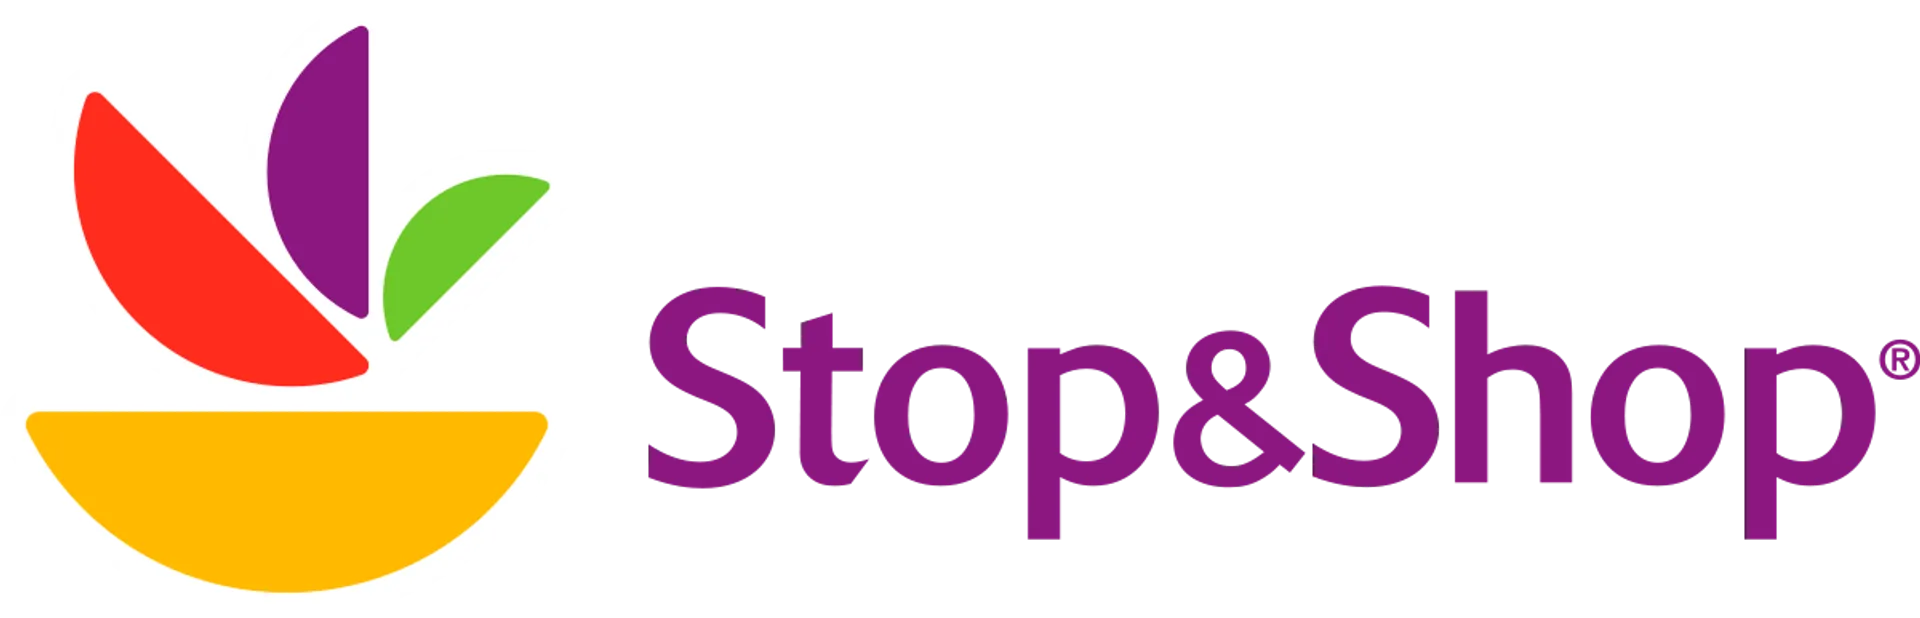 STOP & SHOP logo de catálogo